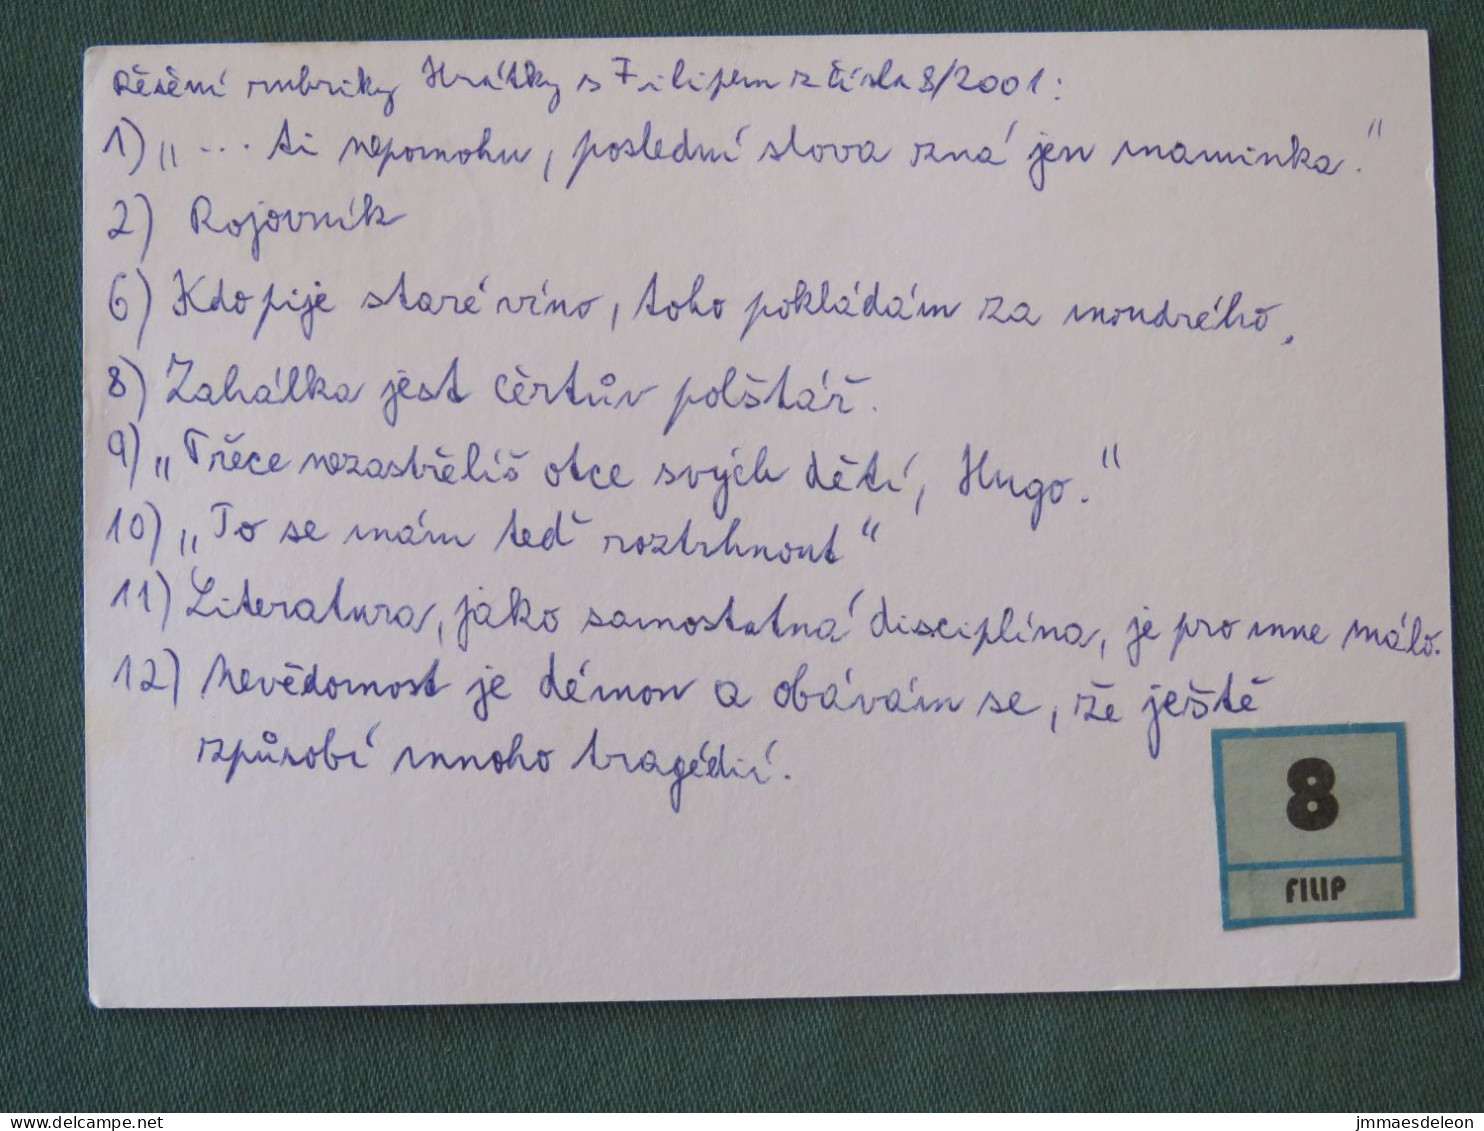 Czech Republic 2001 Stationery Postcard 5.40 Kcs Prague Sent Locally From Prague, EMS Slogan - Lettres & Documents